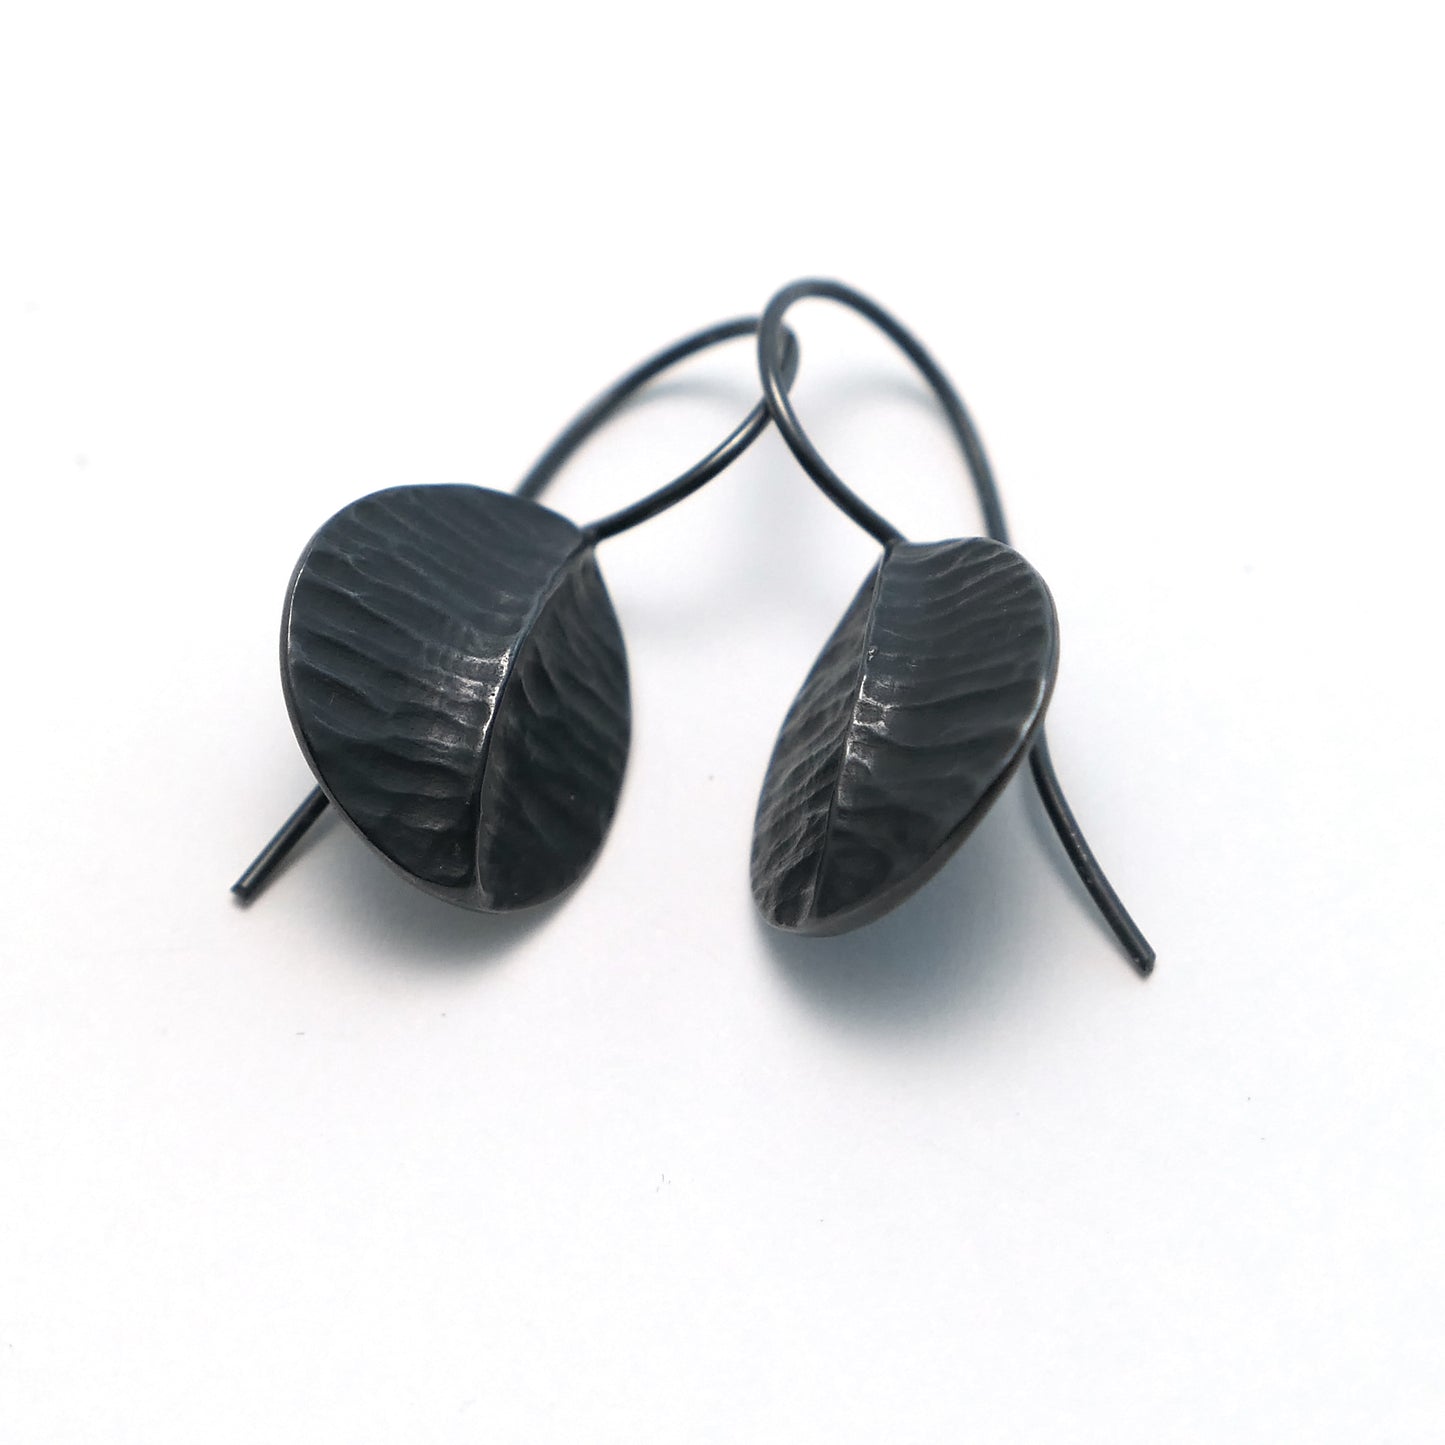 Oxidised silver 'Leaf' earrings